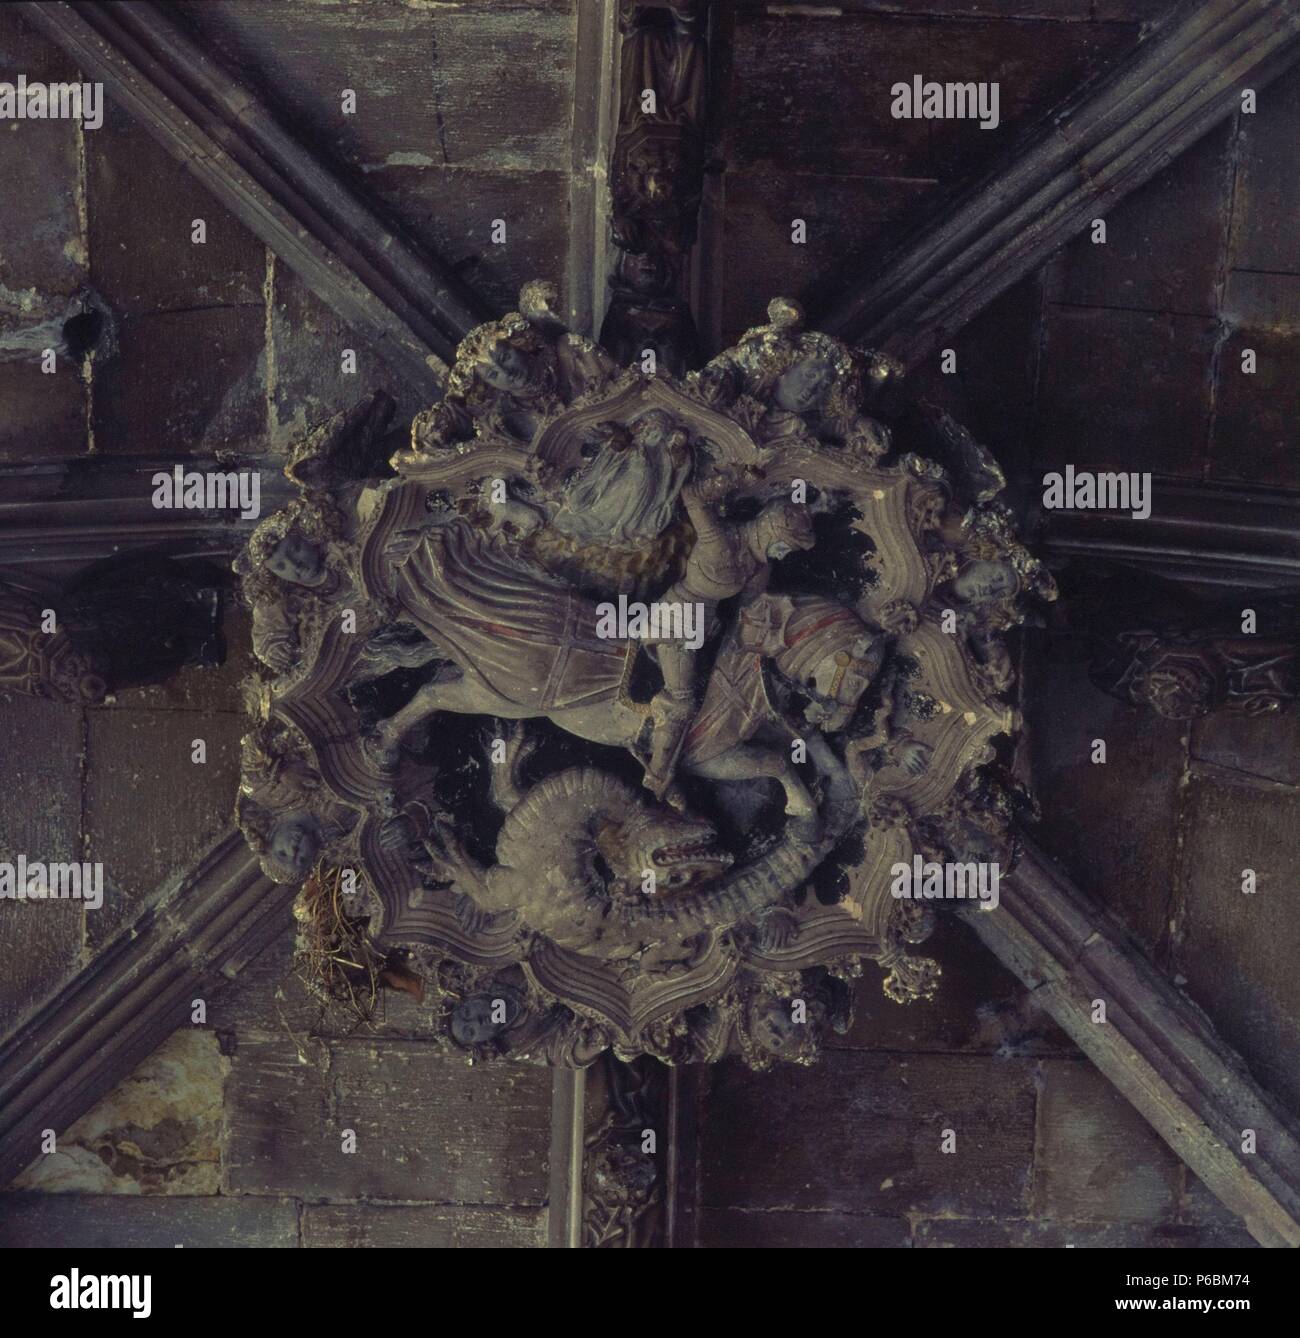 Kreuzgang der Kathedrale des Heiligen Kreuz und der Heiligen Eulalia, Barcelona. 15. Jahrhundert. Museum: Catedral de Santa Eulalia, Barcelona. Stockfoto